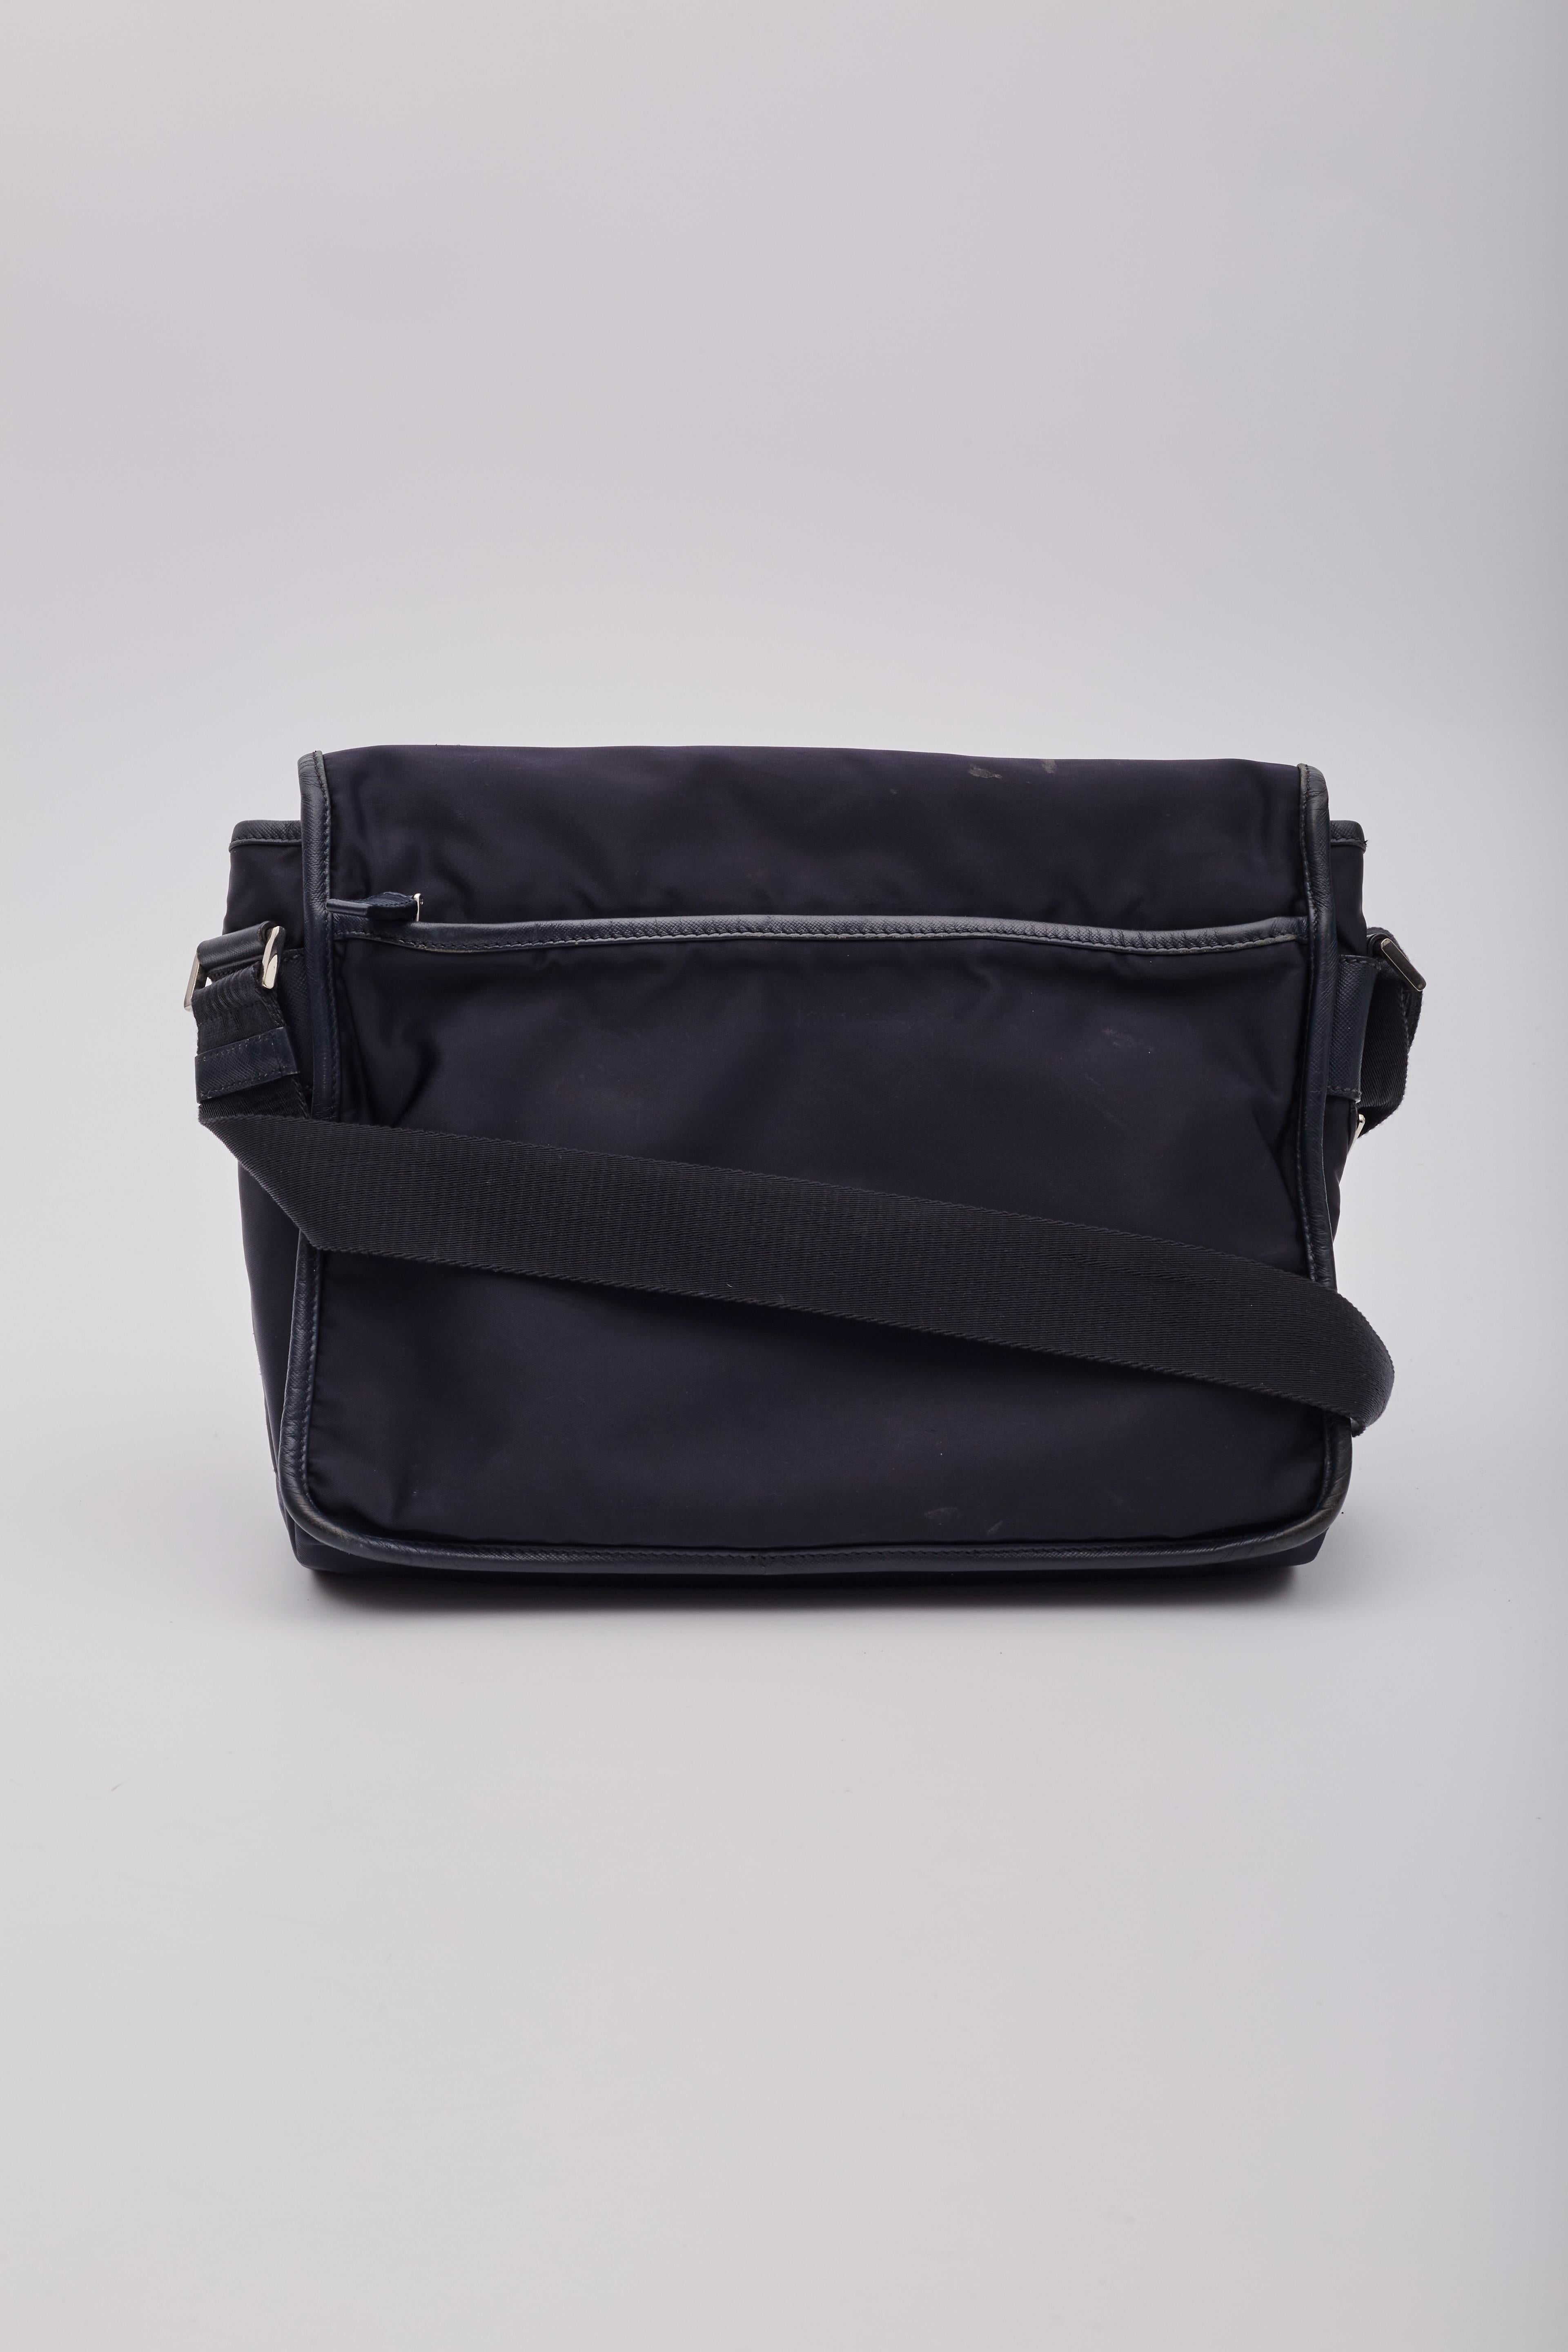 Prada Navy Tessuto Nylon Logo Flap Messenger Bag In Good Condition For Sale In Montreal, Quebec